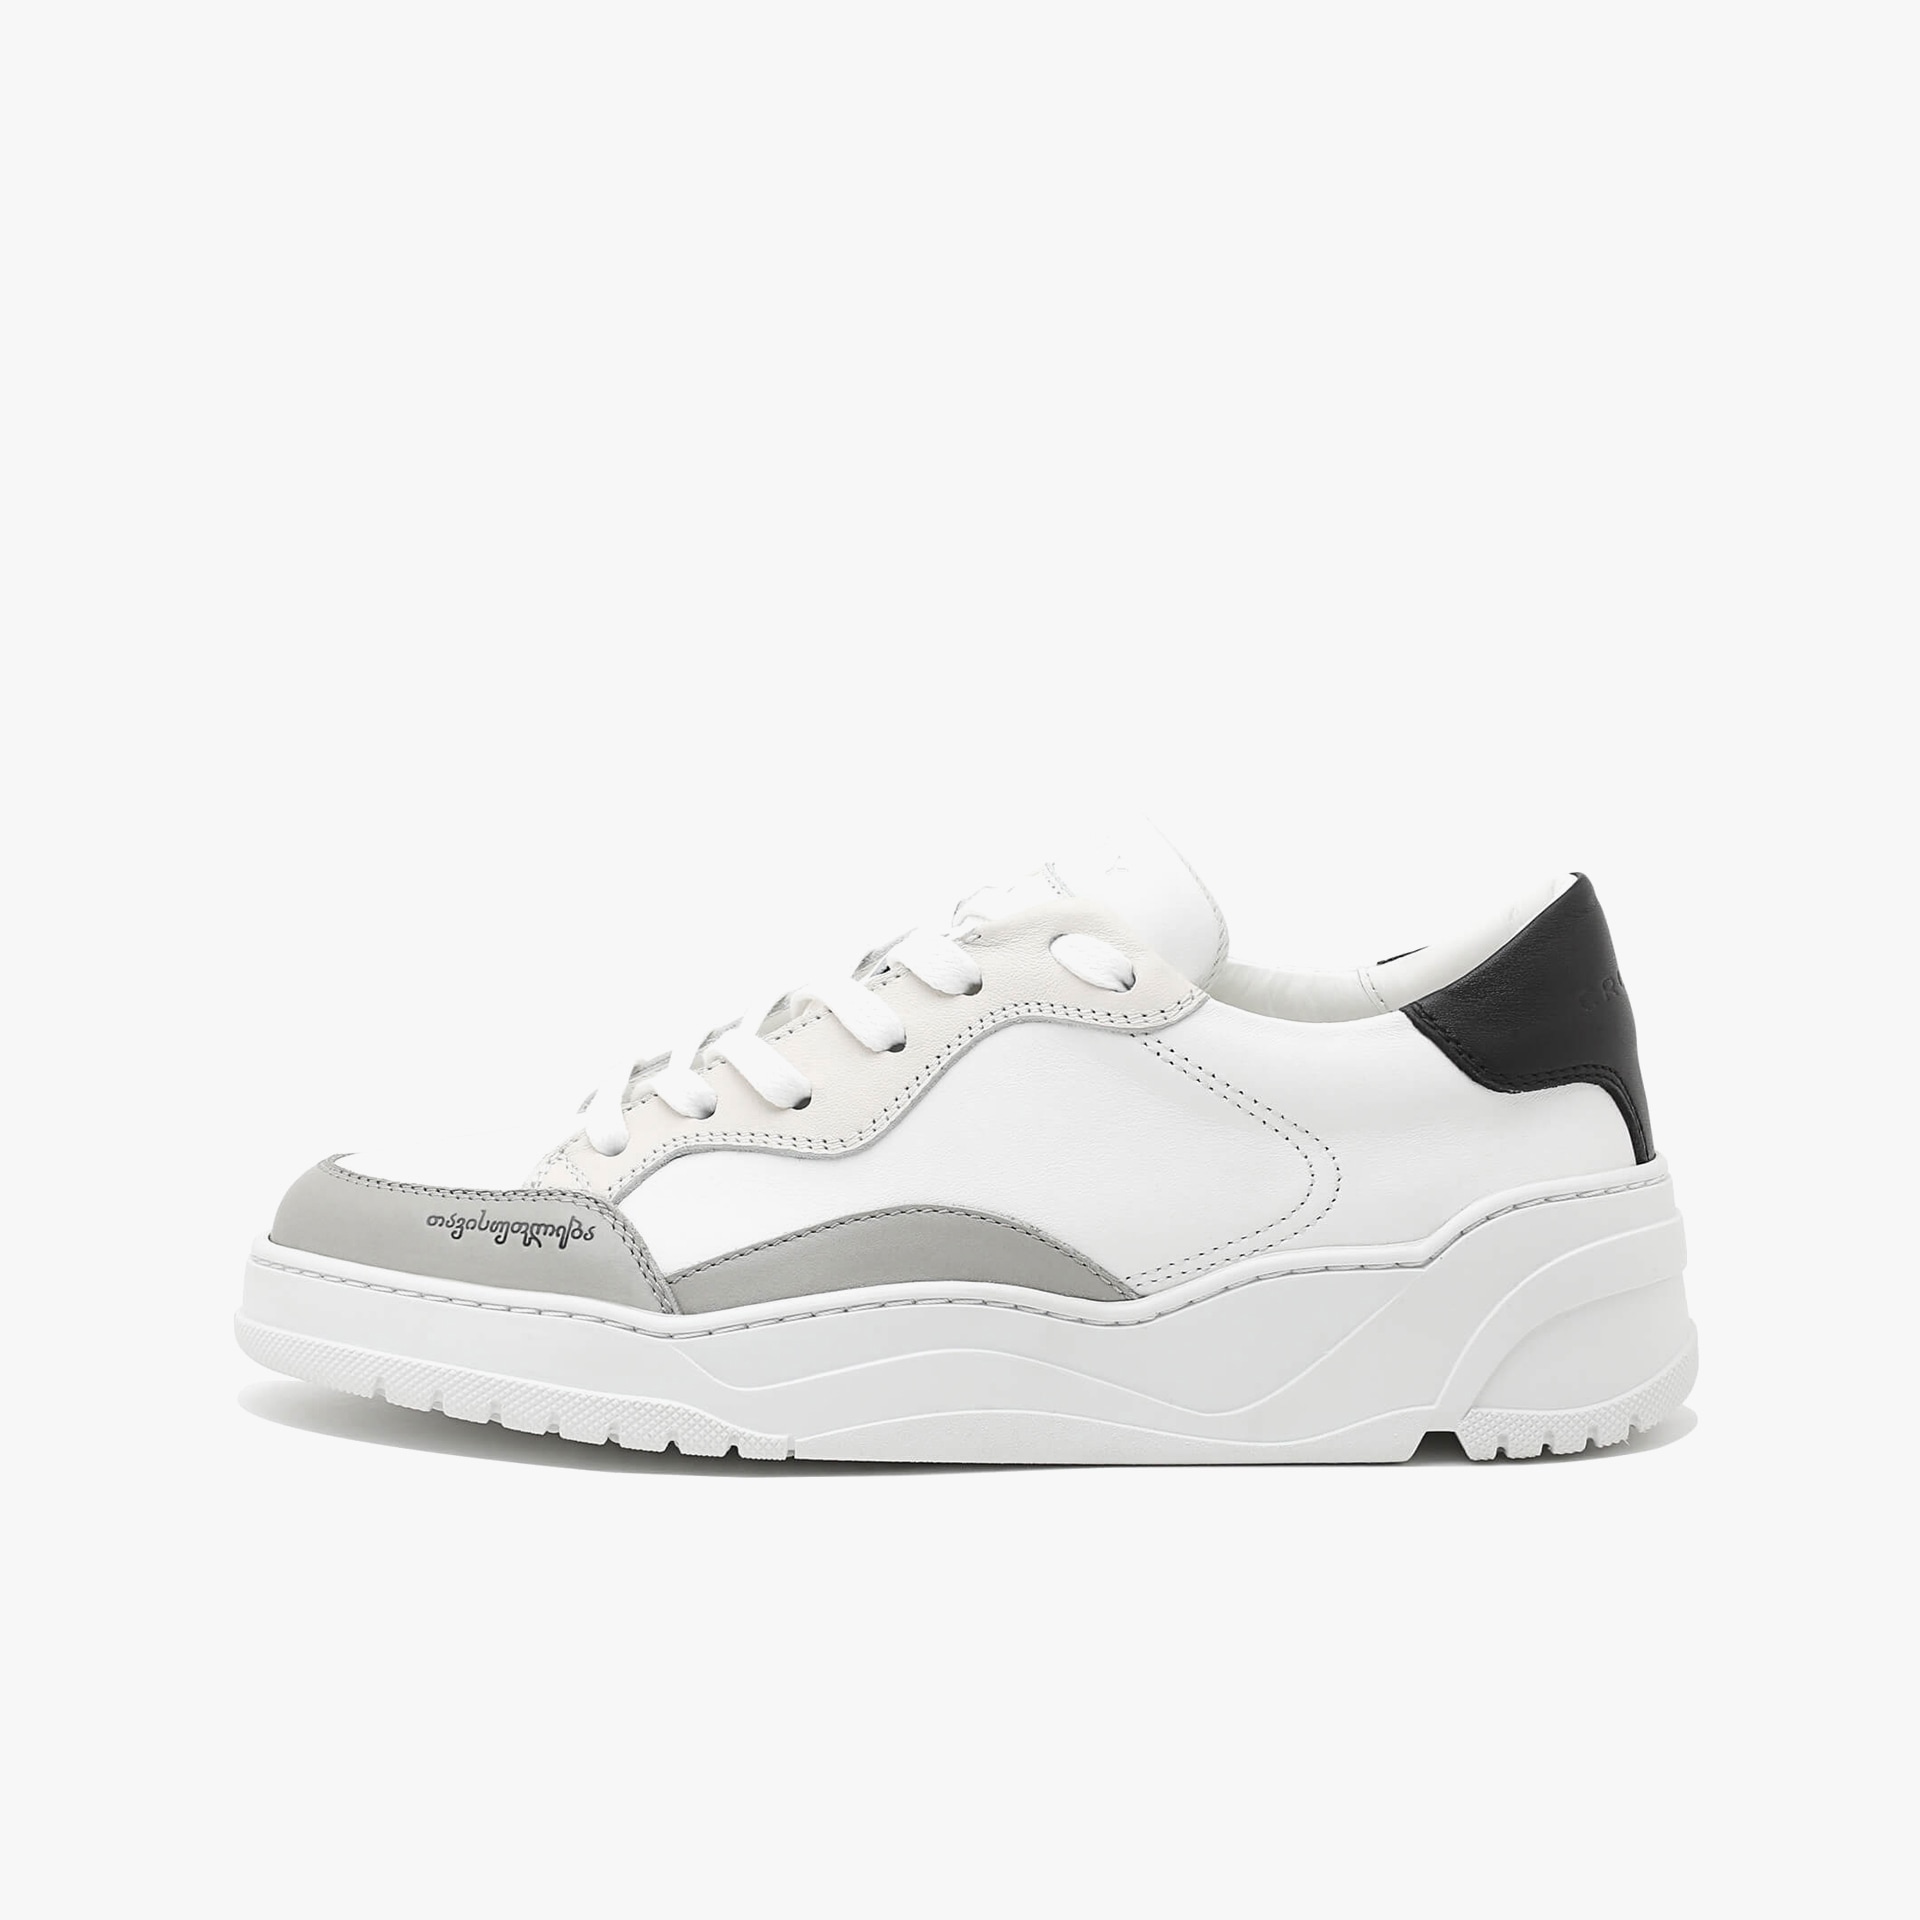 light grey shoes